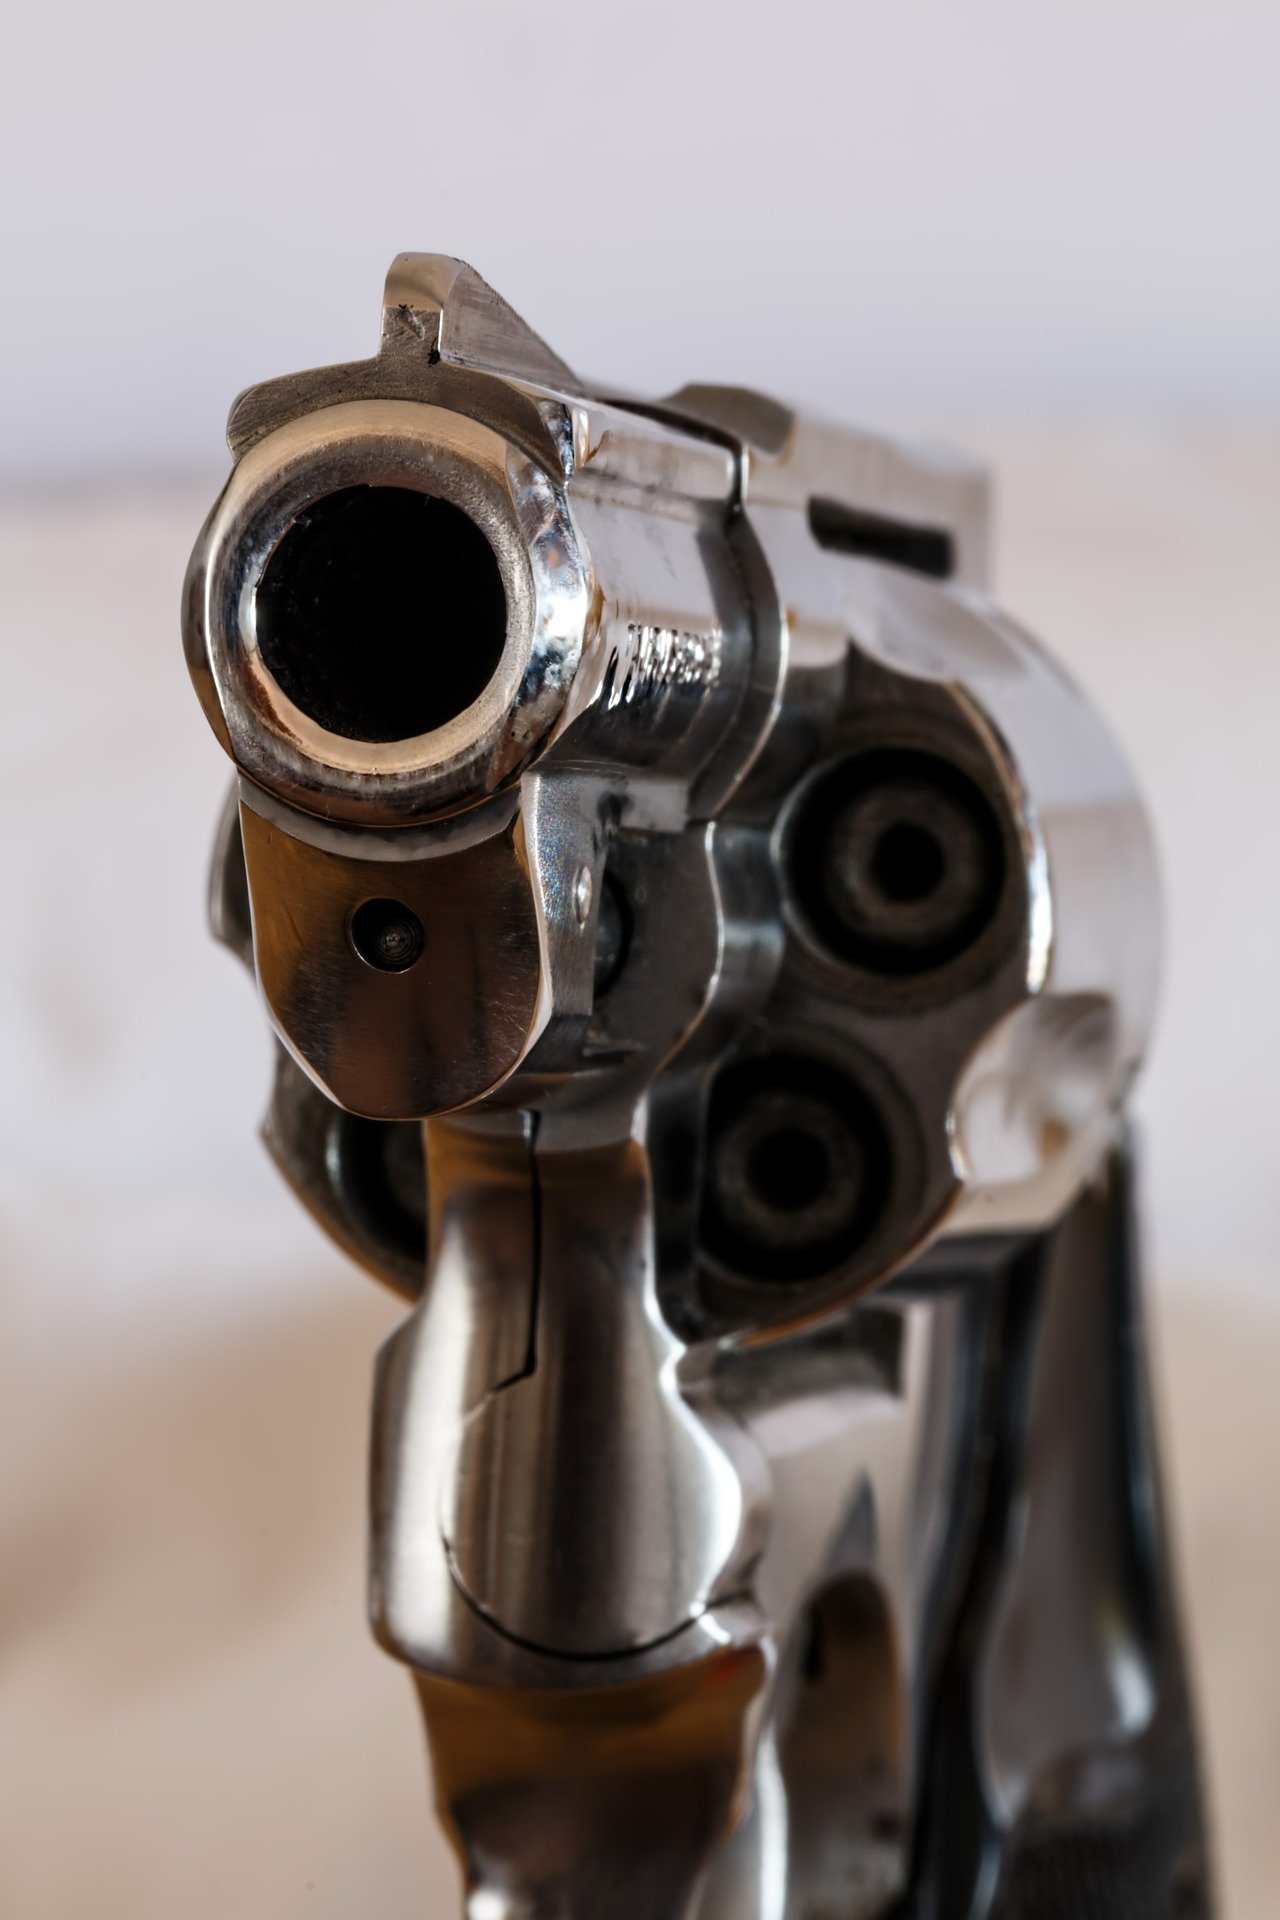 A handgun revolver | Source: Pixabay